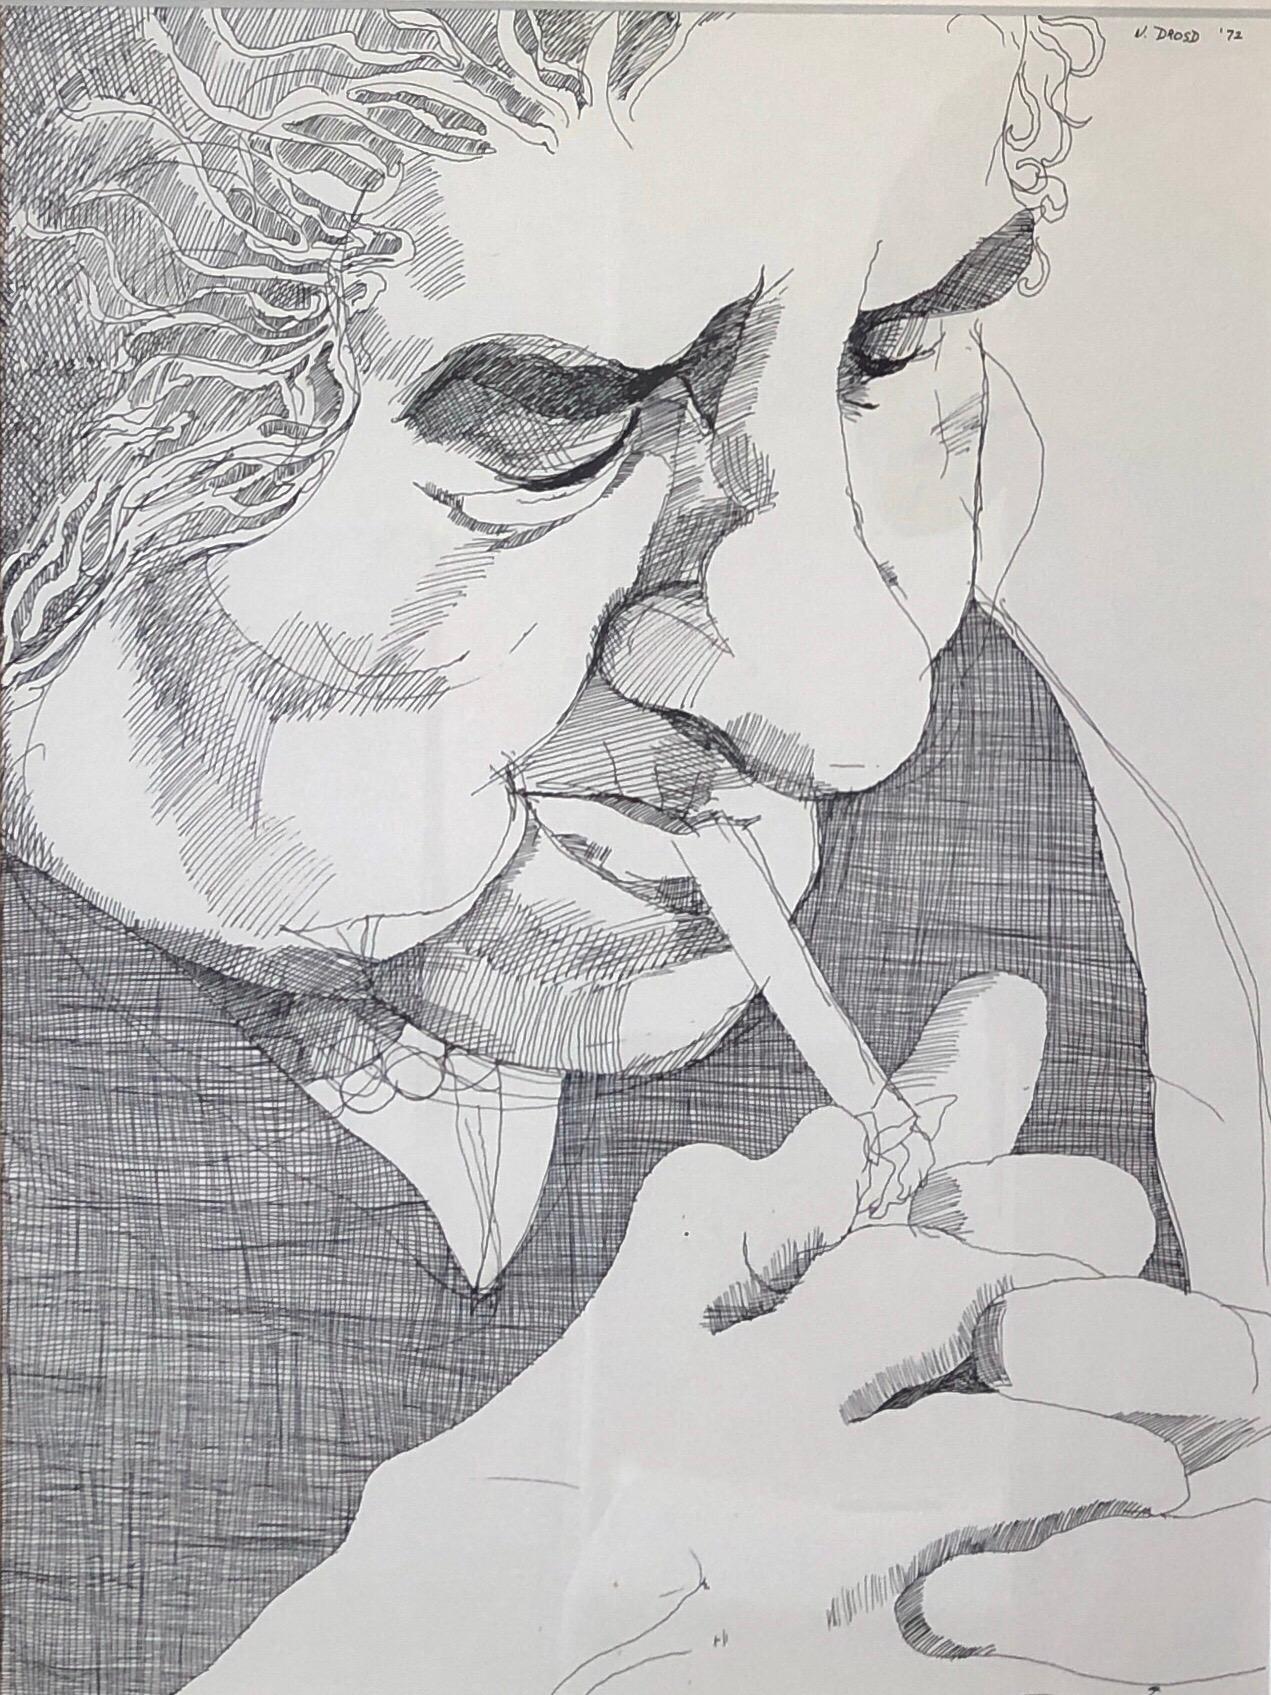 Golda Meir Israeli Woman Prime Minister Smoking Cigarette Ink Line Drawing 1972 